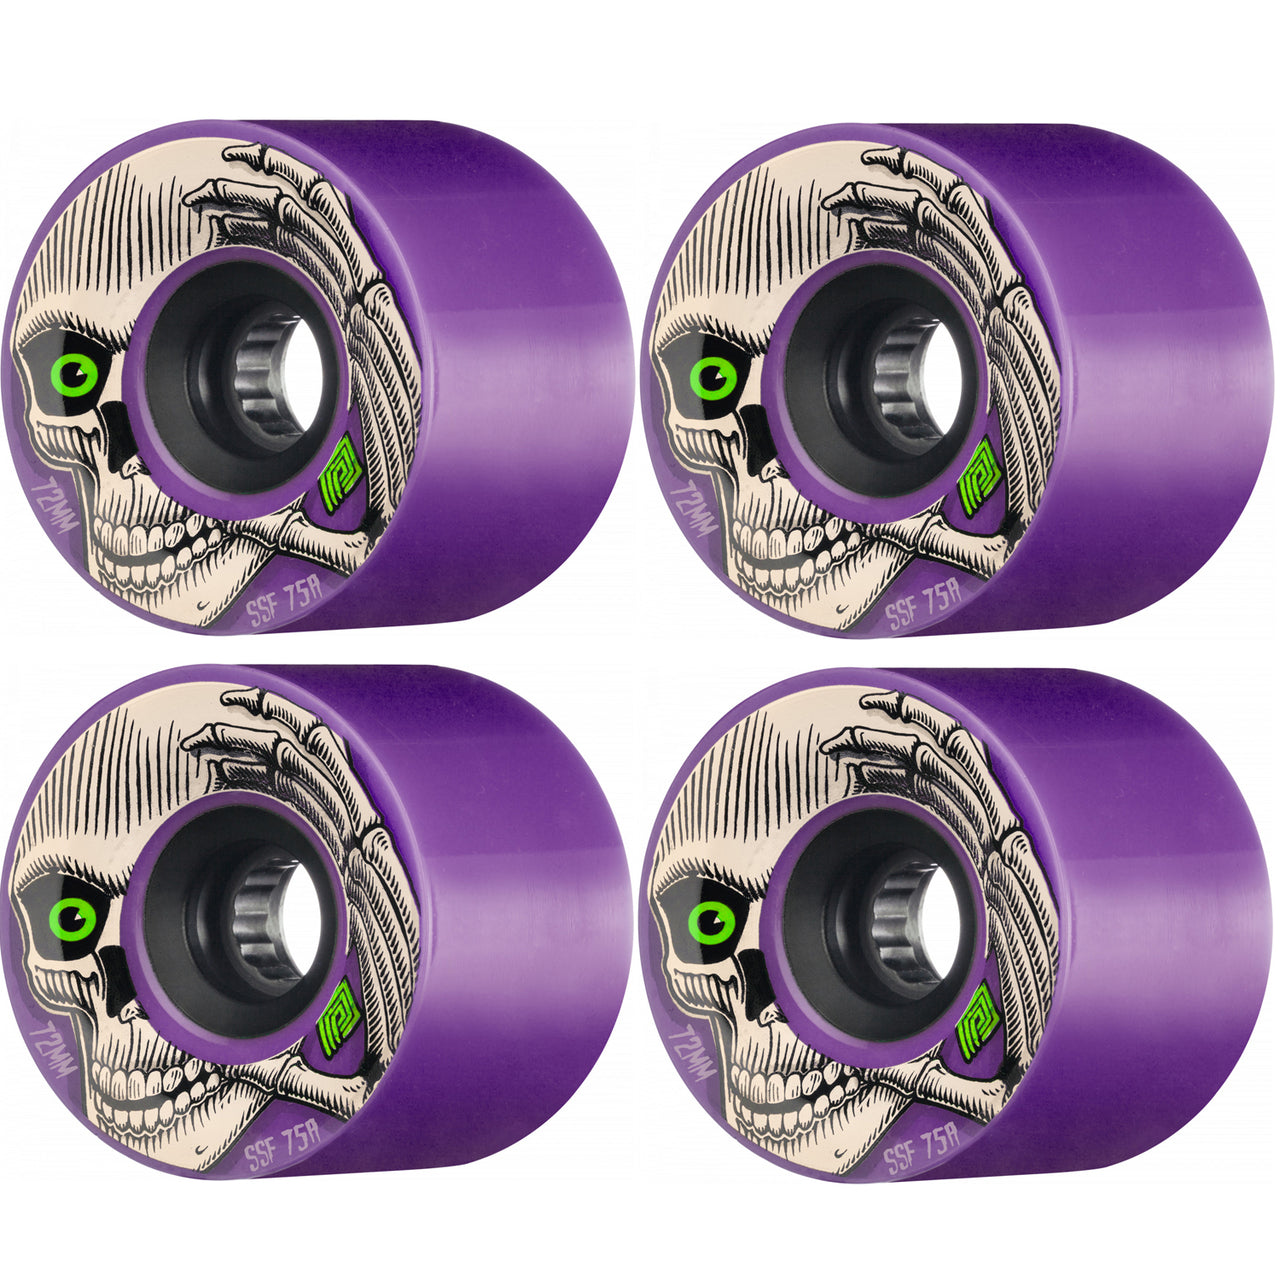 Powell Peralta Kevin Reimer Skateboard Wheels Purple 72MM 75A